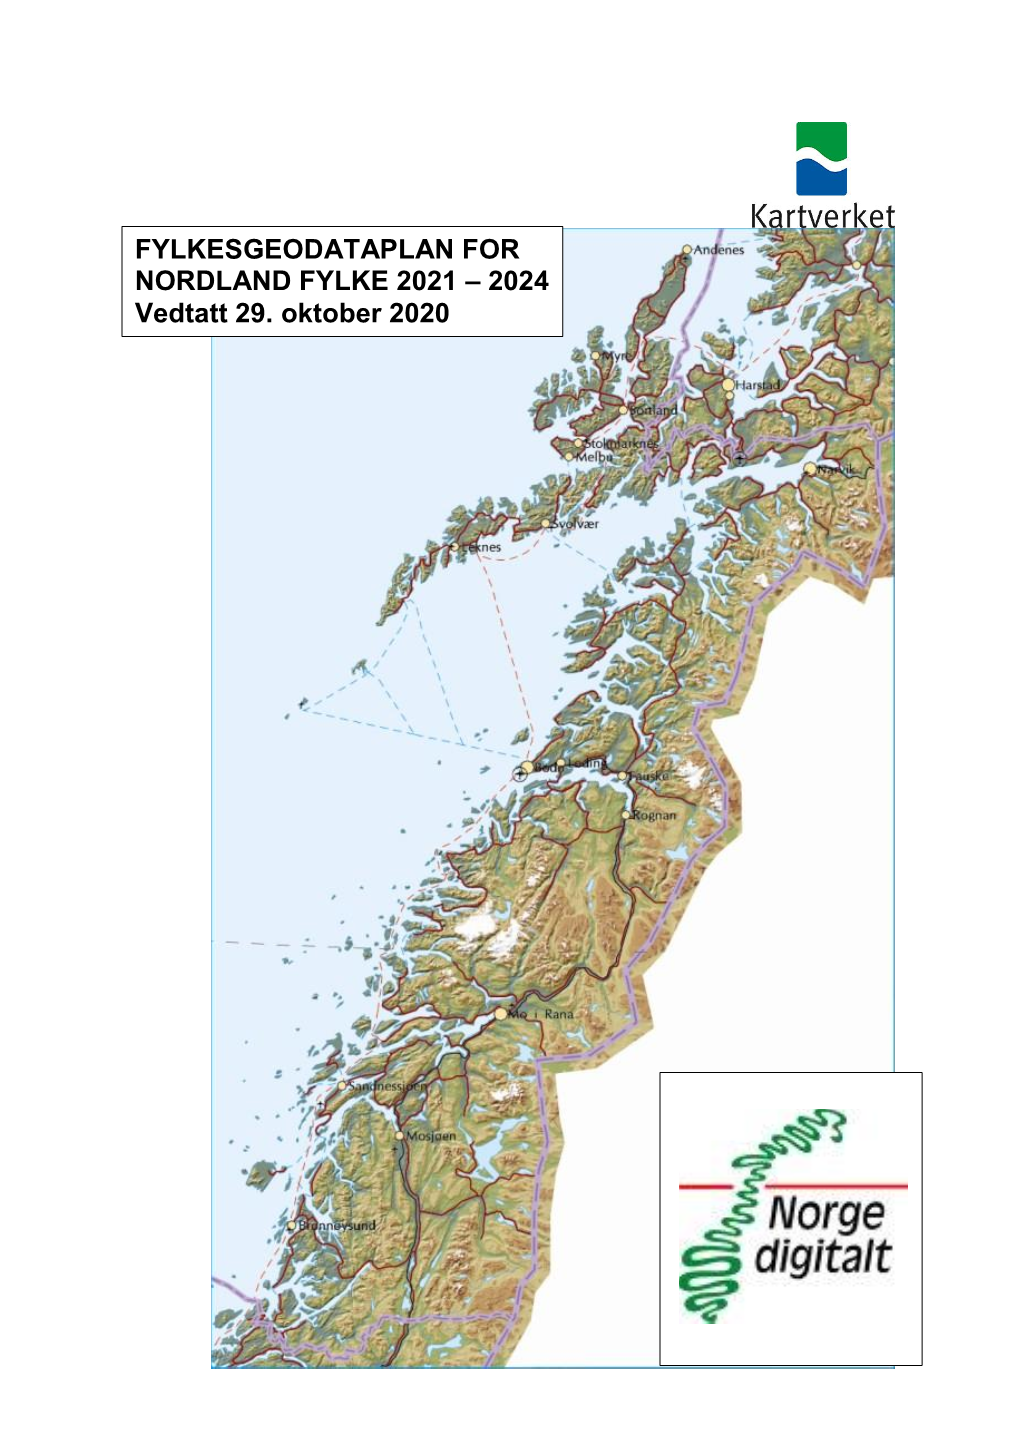 Fylkesgeodataplan for Nordland Fylke 2021-2024